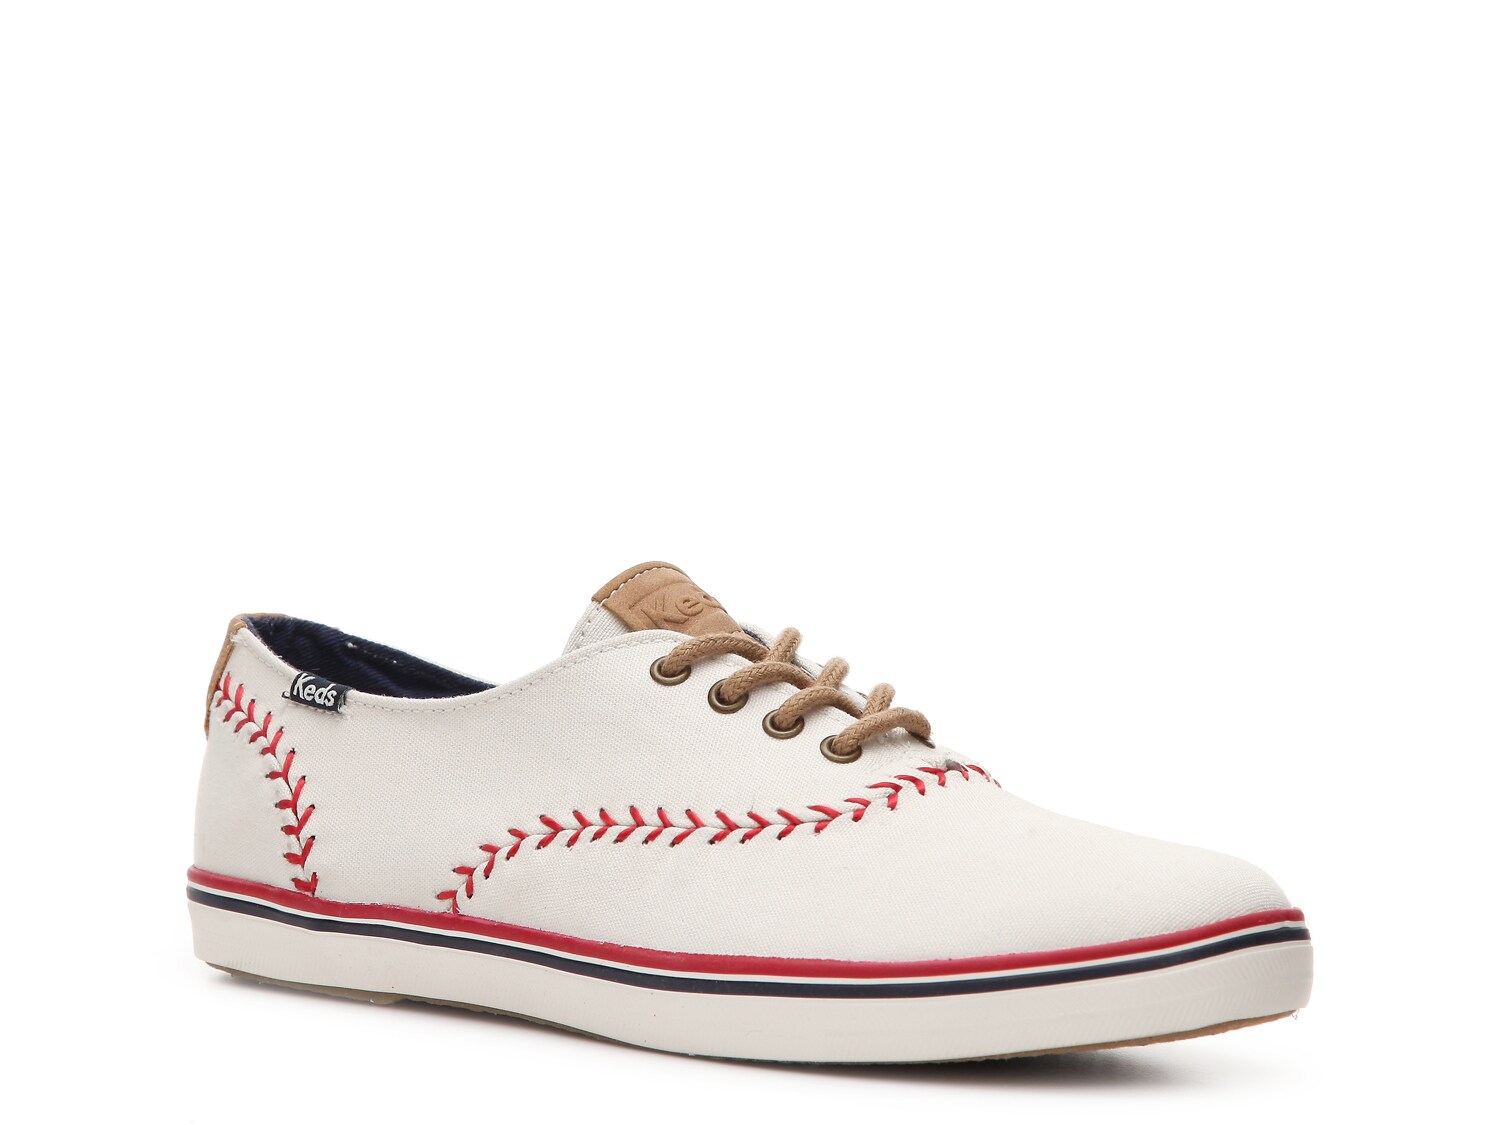 keds baseball shoes leather